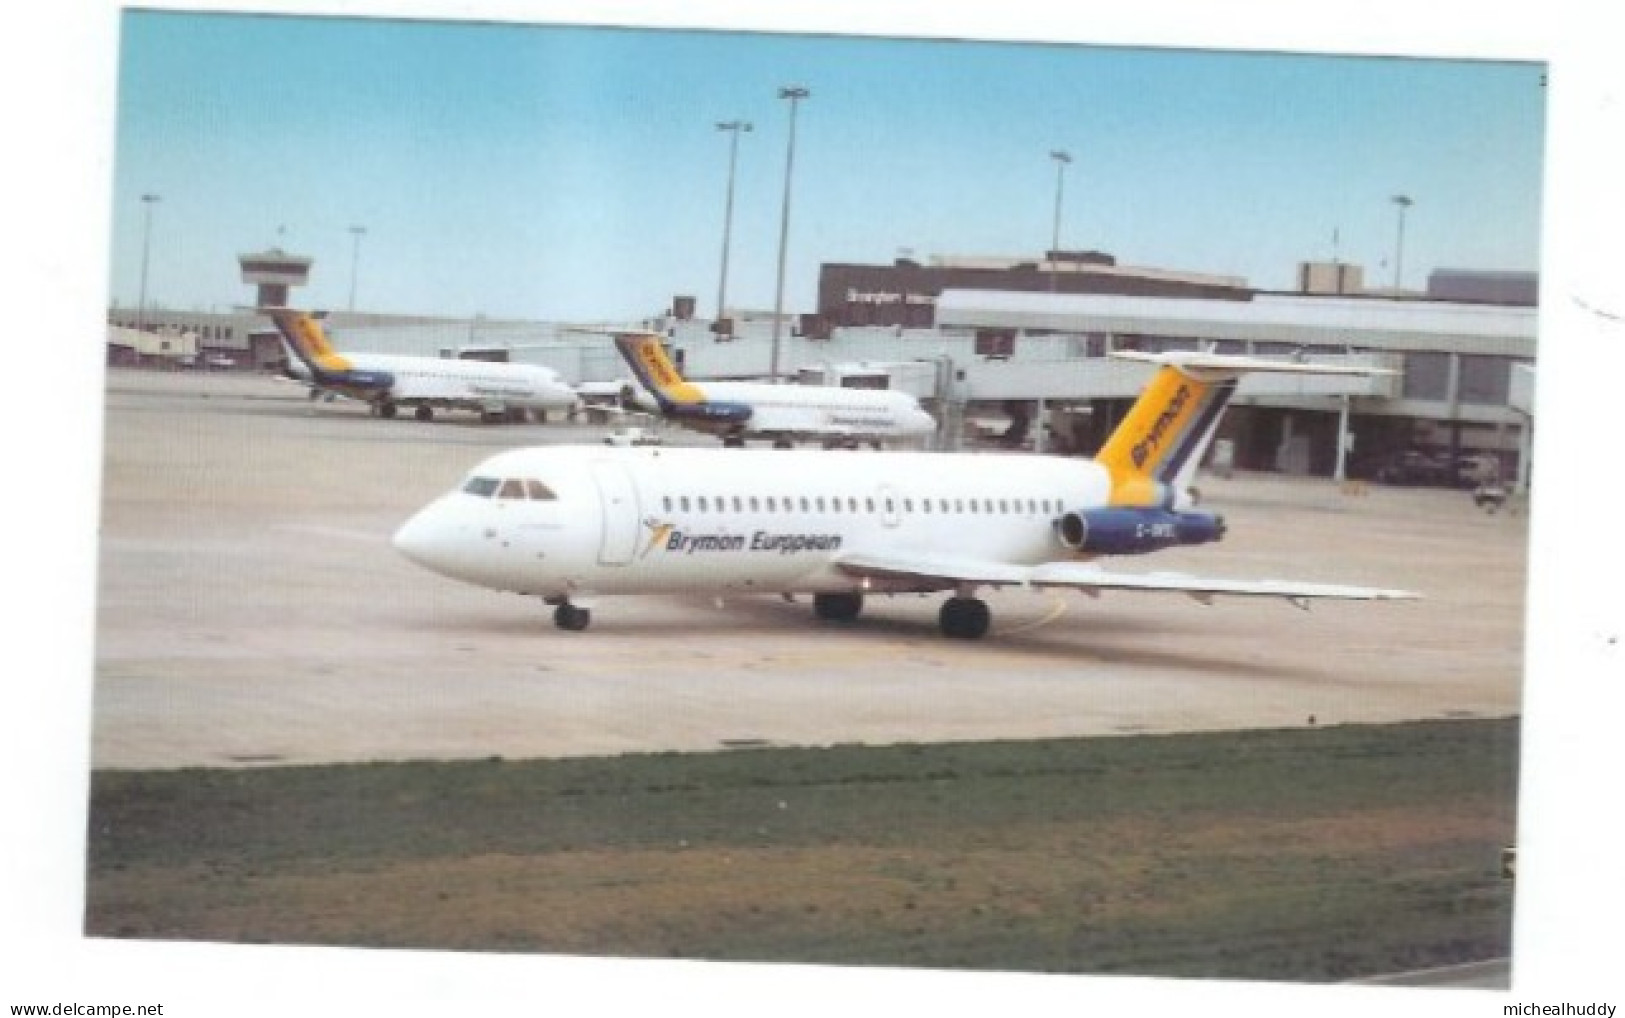 POSTCARD   PUBL BY  BY C MCQUAIDE IN HIS AIRPORT SERRIES  BIRMINGHAM INTERNATIONAL   CARD N0 15 - Aerodromes